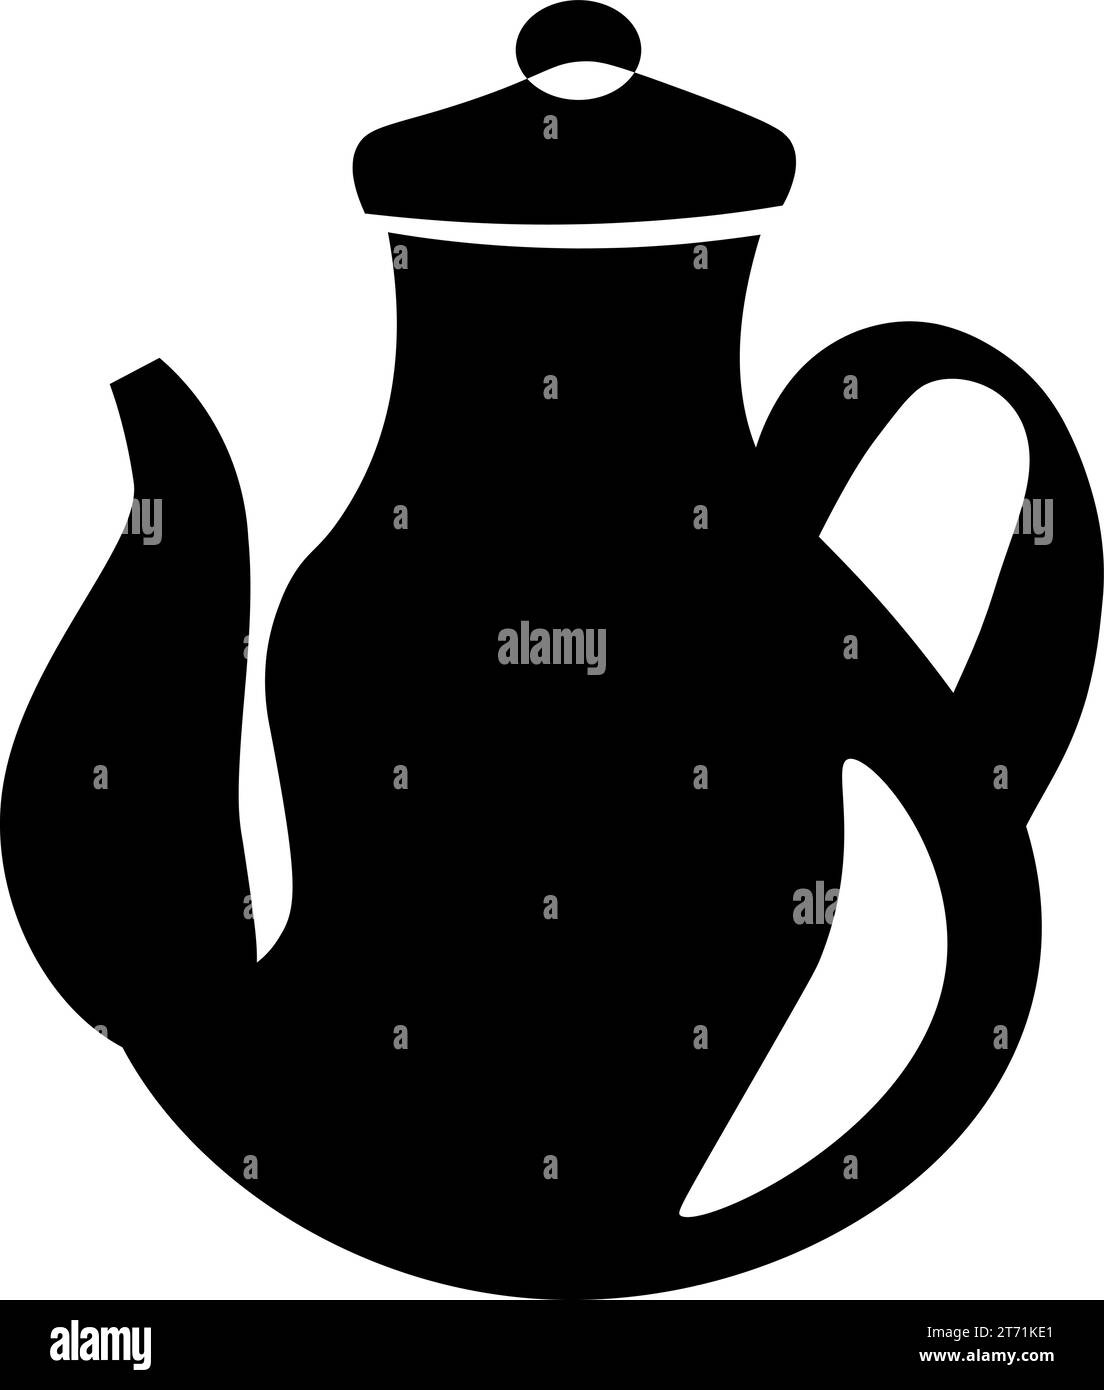 https://c8.alamy.com/comp/2T71KE1/silhouette-of-ceramic-jug-with-lid-and-long-spout-element-of-thanksgiving-day-festive-table-decoration-ceramic-jug-contour-holiday-symbol-simple-bl-2T71KE1.jpg